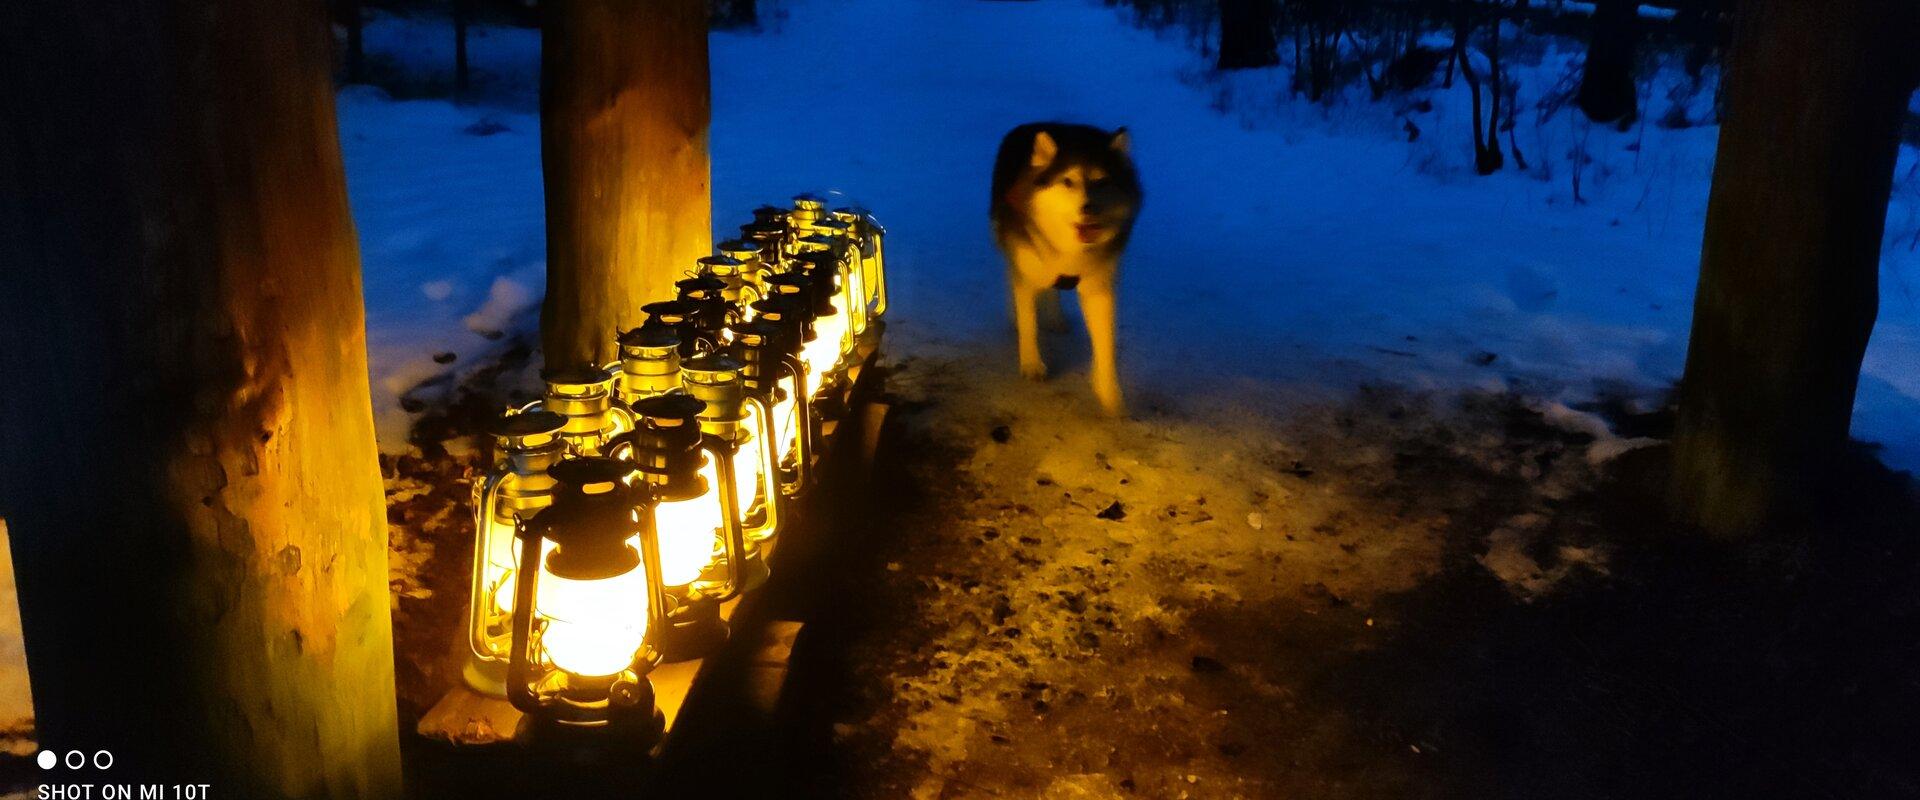 Lantern hike in pristine nature and campfire night